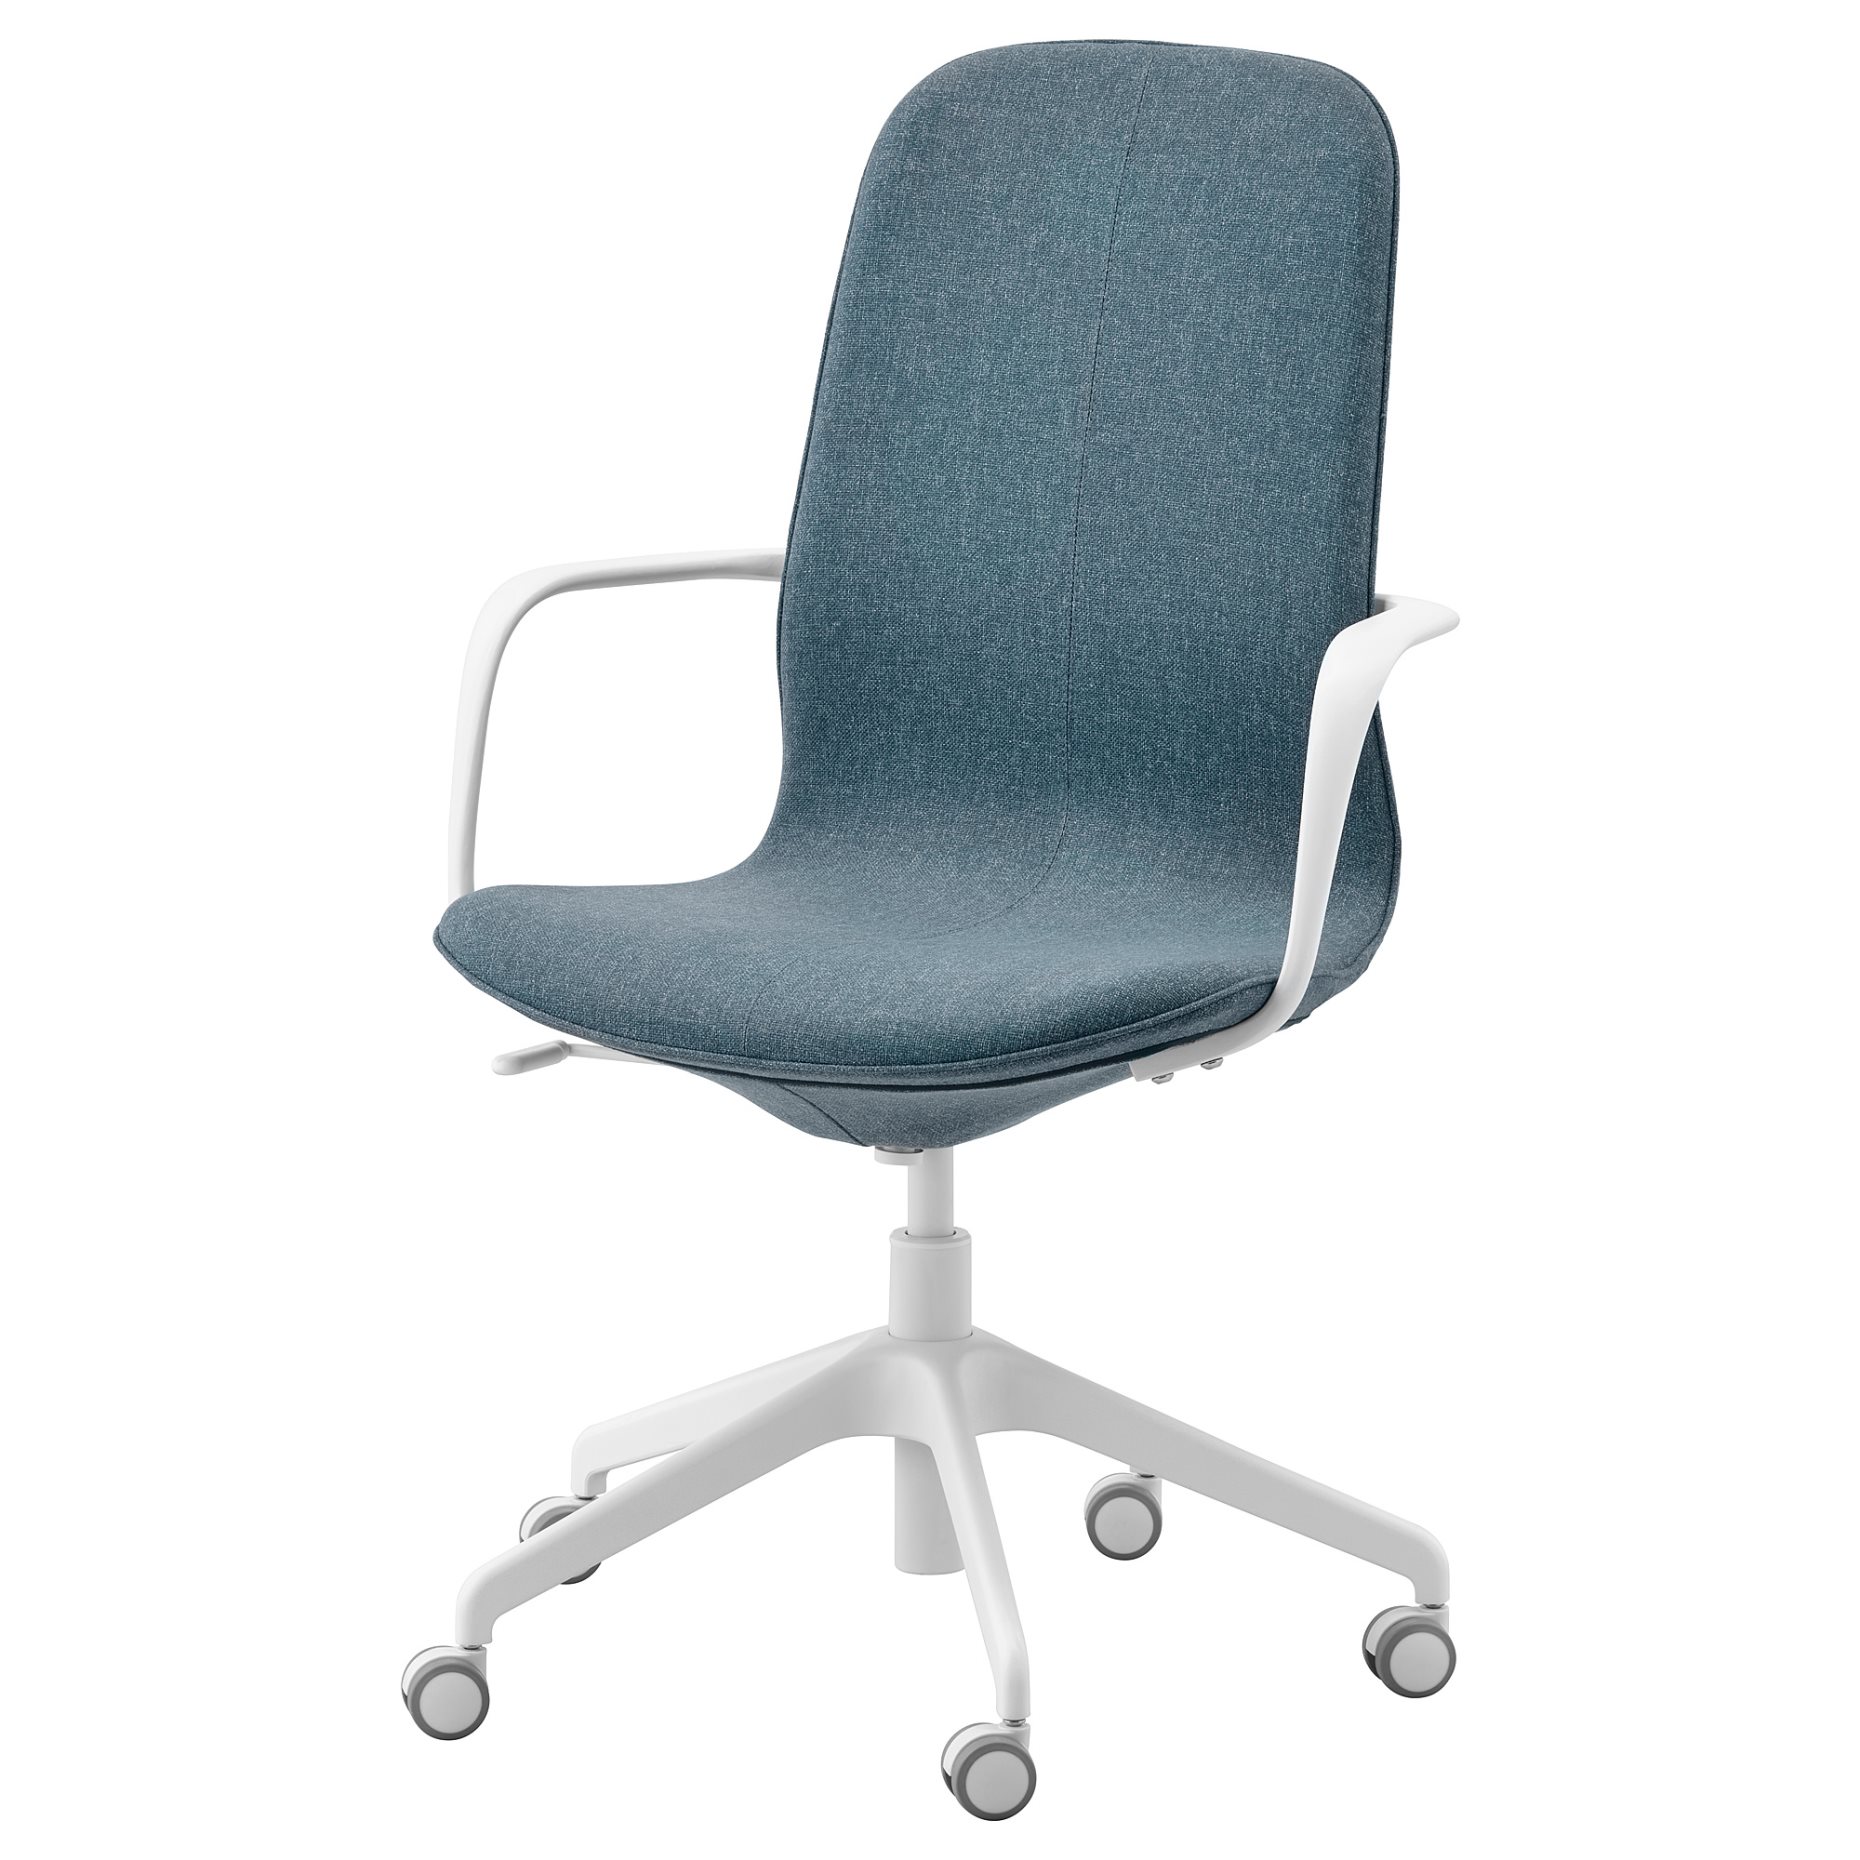 LÅNGFJÄLL, swivel chair, 792.528.58